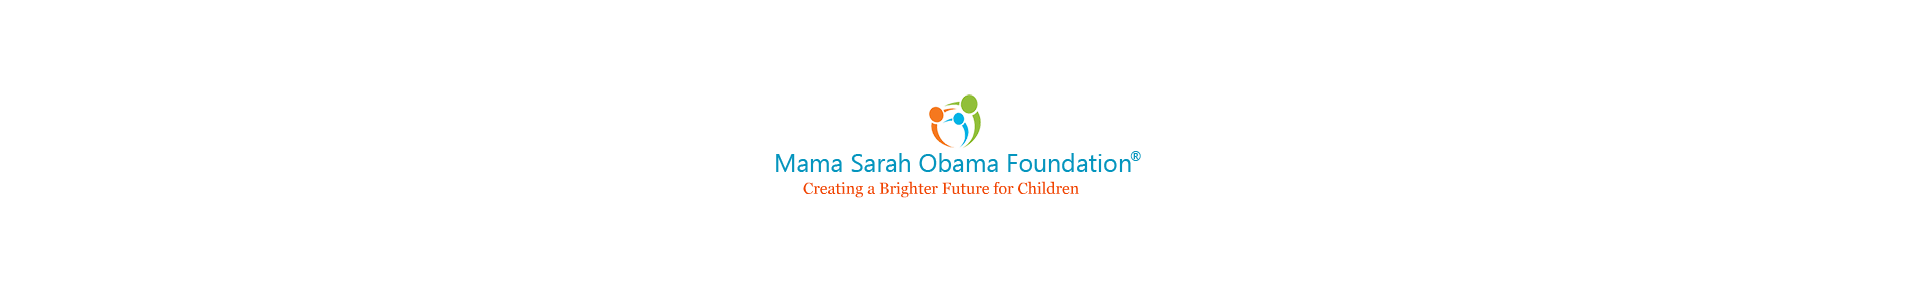 Partnership with Mama Sarah Obama Foundation